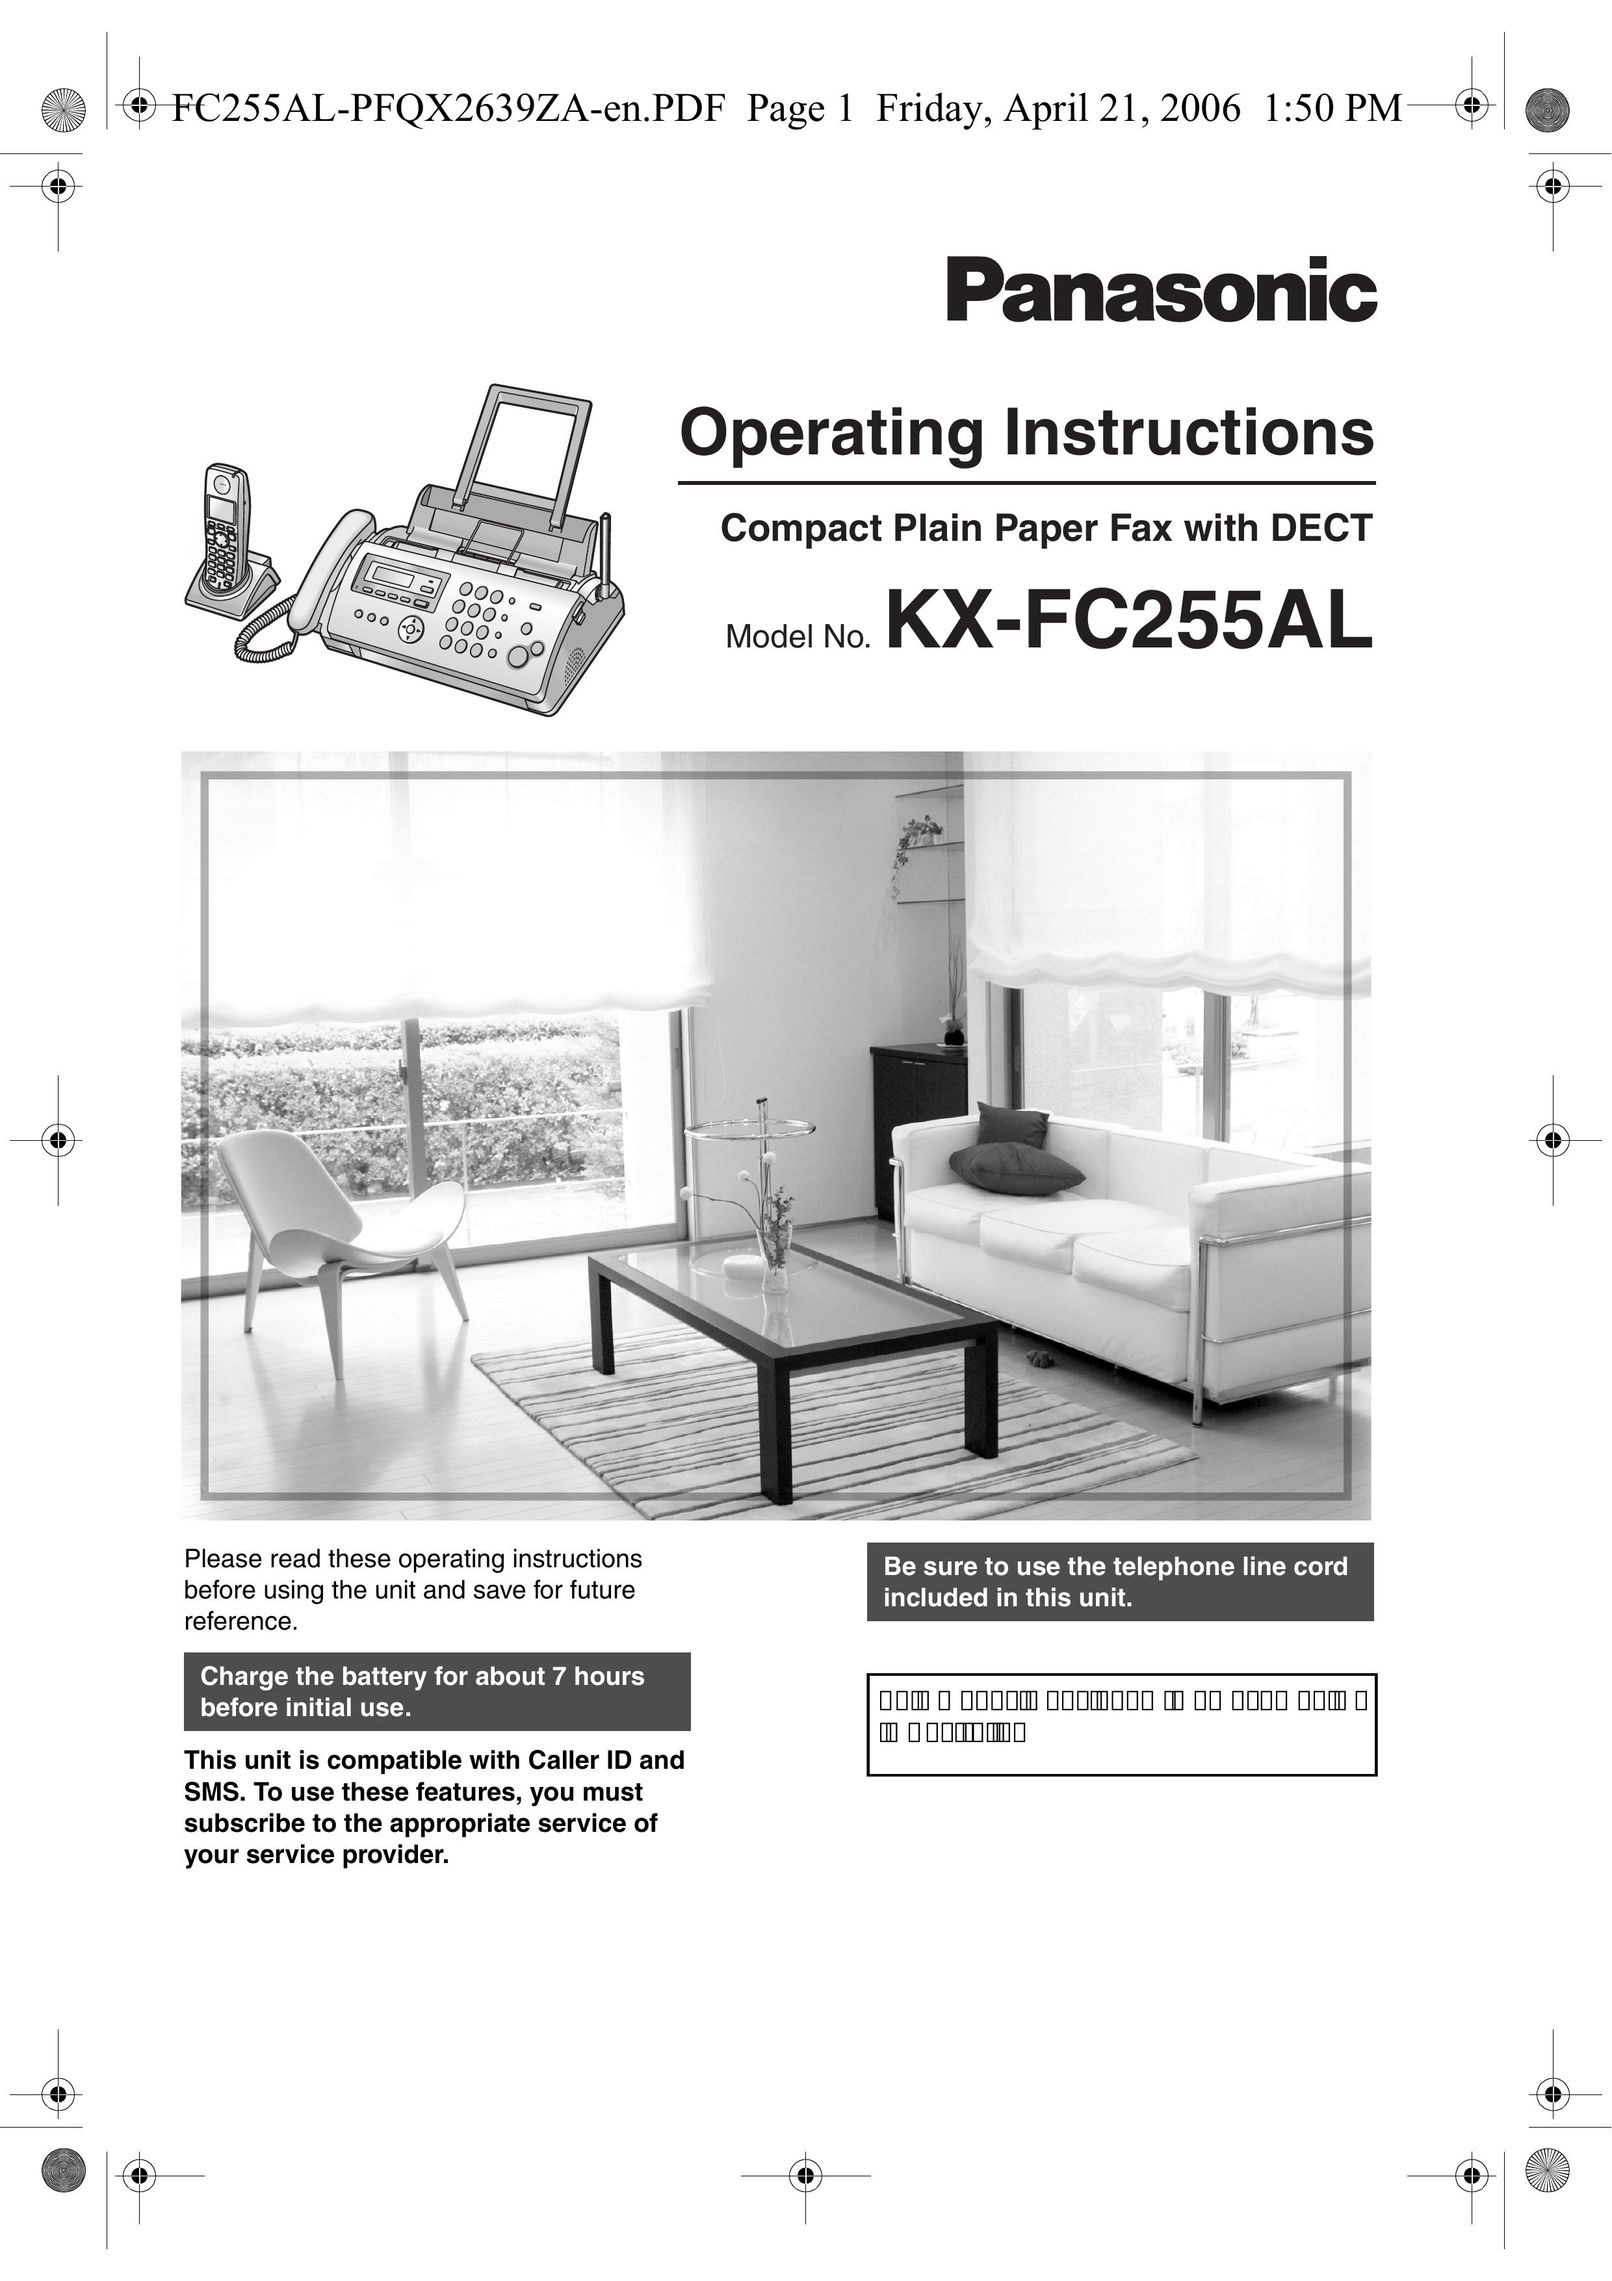 Panasonic KX-FC255AL Fax Machine User Manual